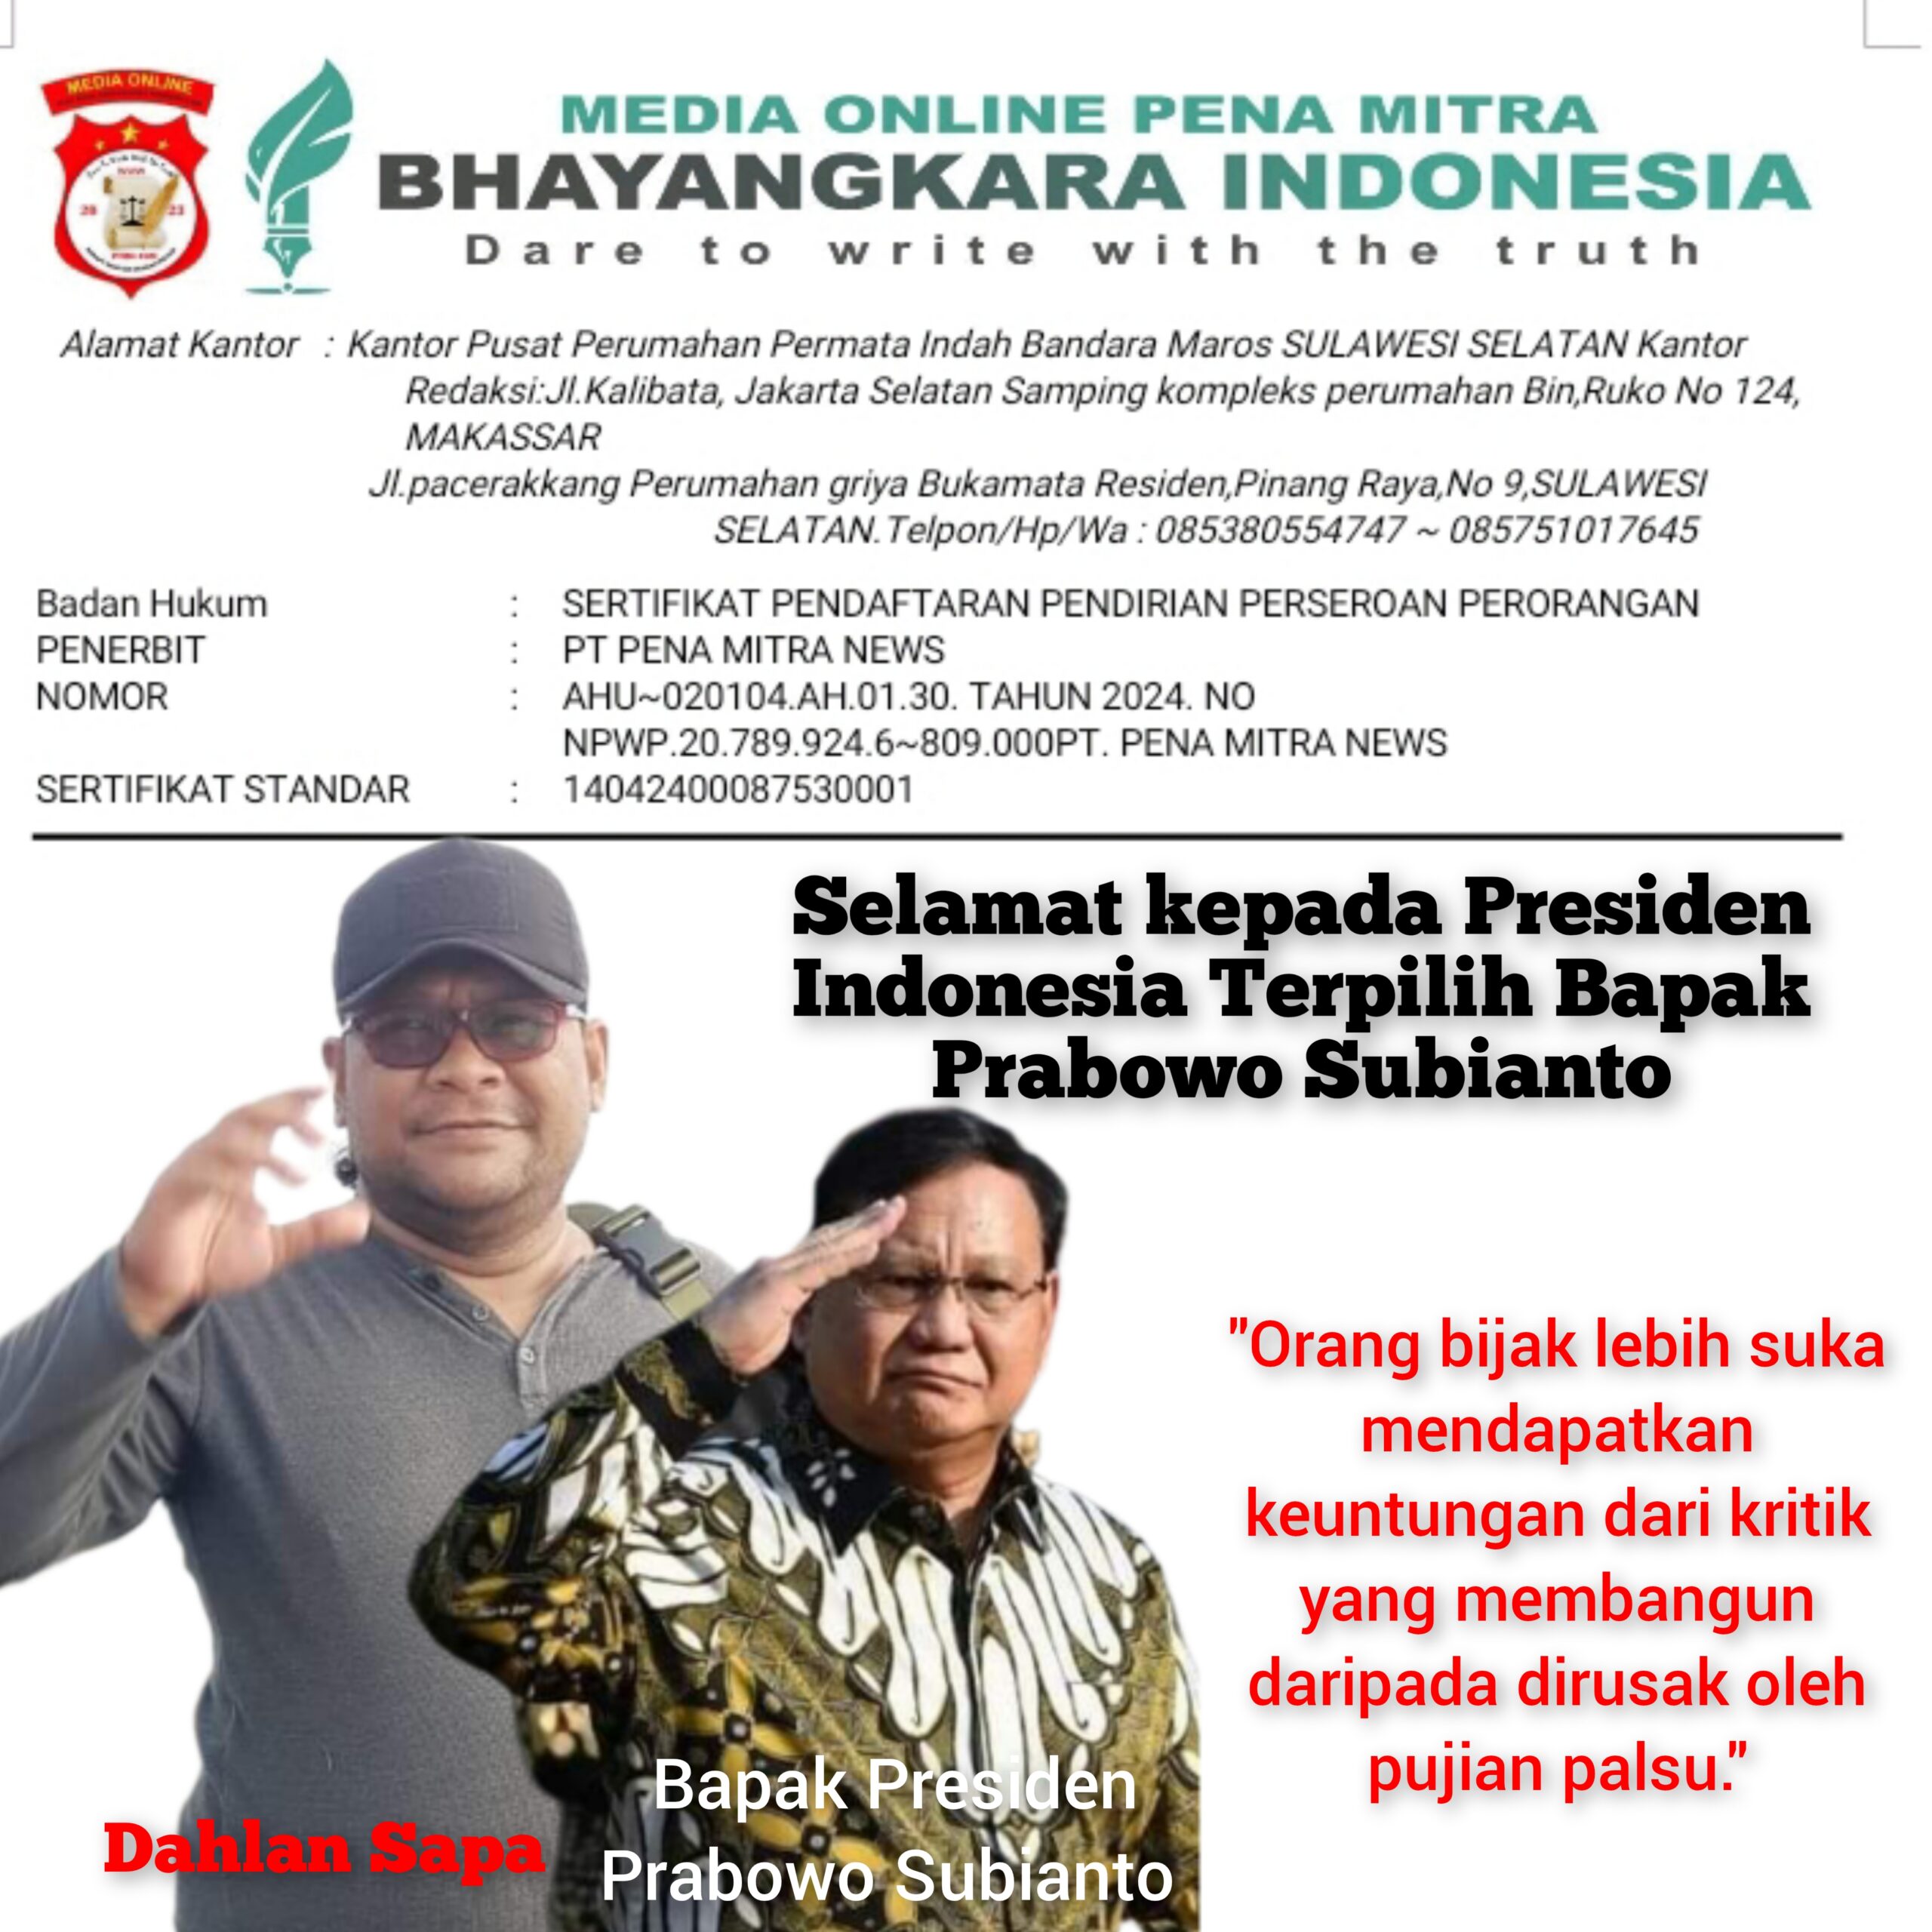 Selamat kepada Presiden Indonesia Terpilih Prabowo Subianto